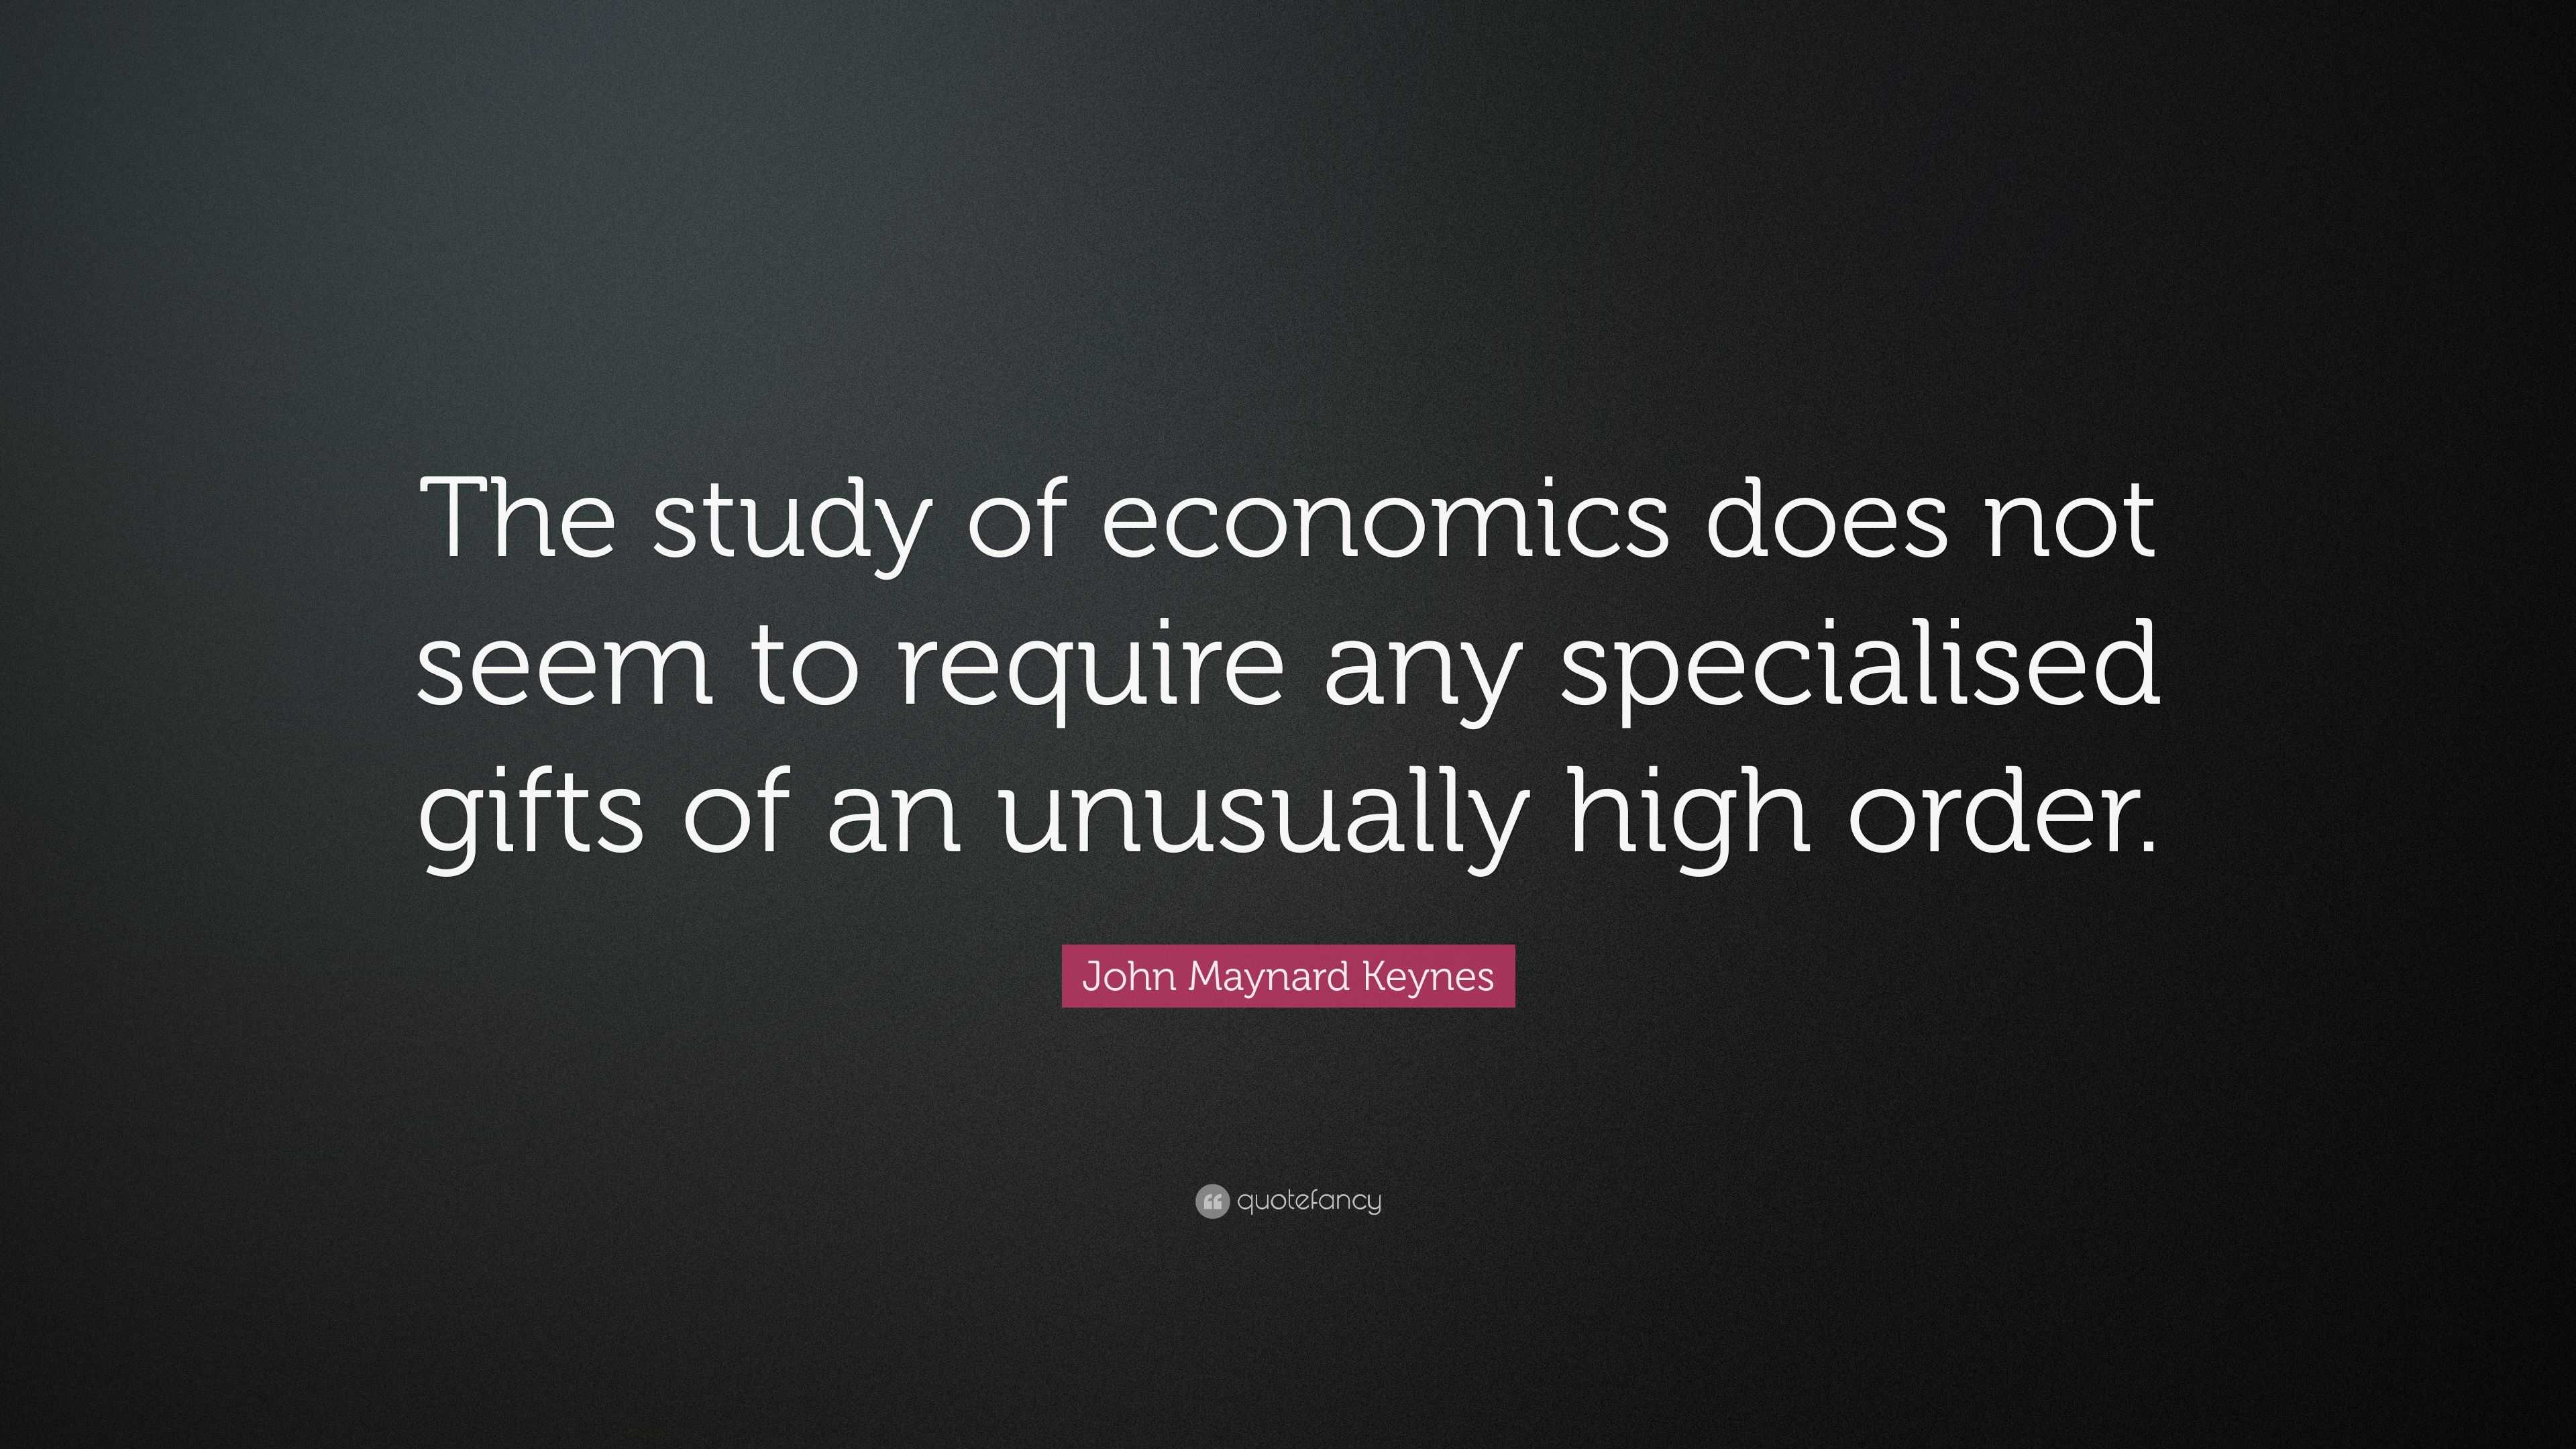 2646752 John Maynard Keynes Quote The study of economics does not seem to